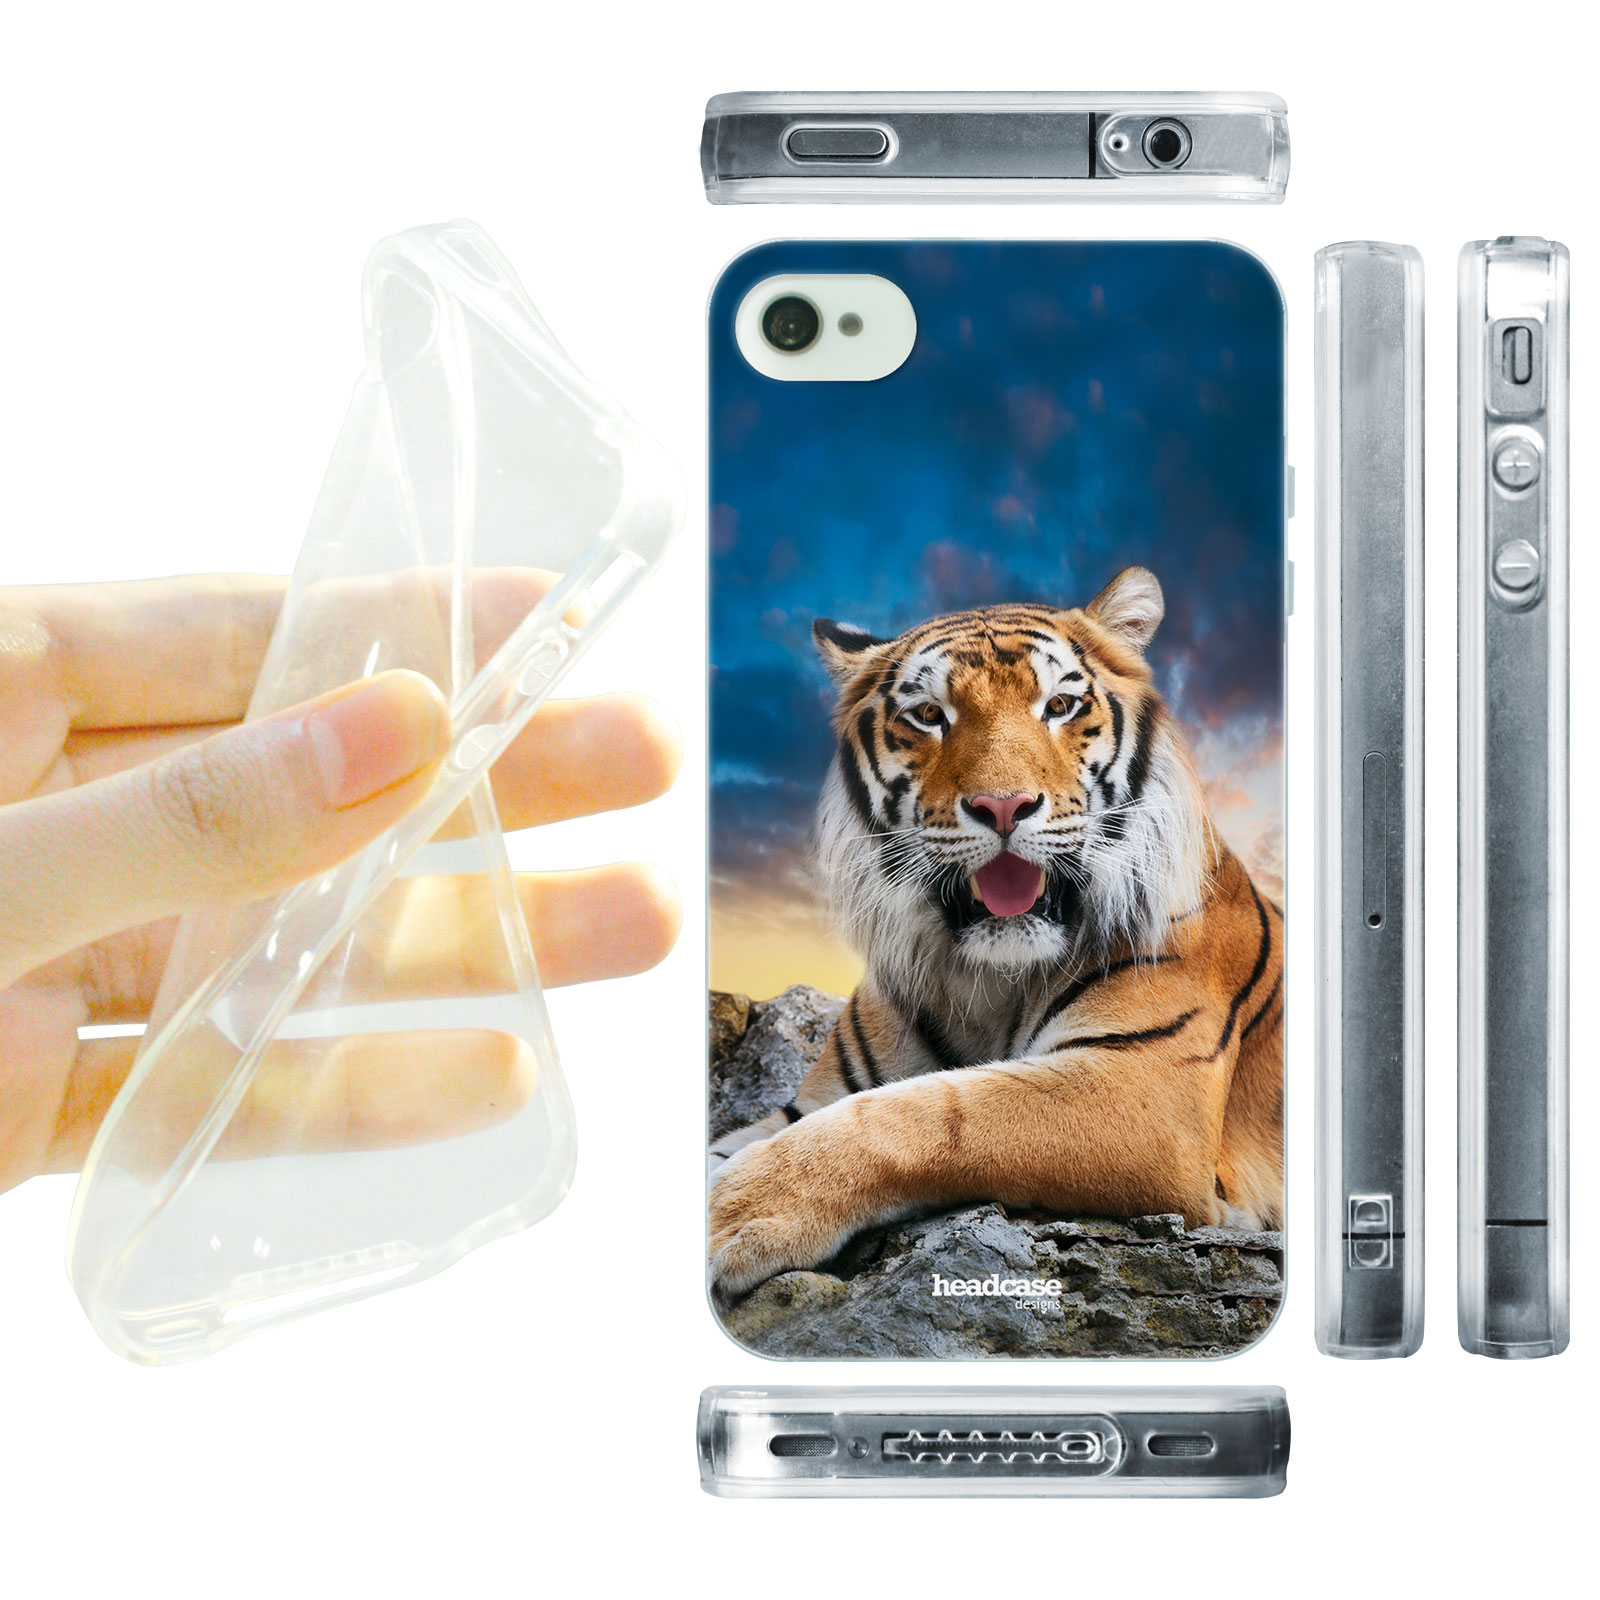 HEAD CASE silikonový obal na mobil Iphone 4/4S divočina tygr bengálský portrét foto